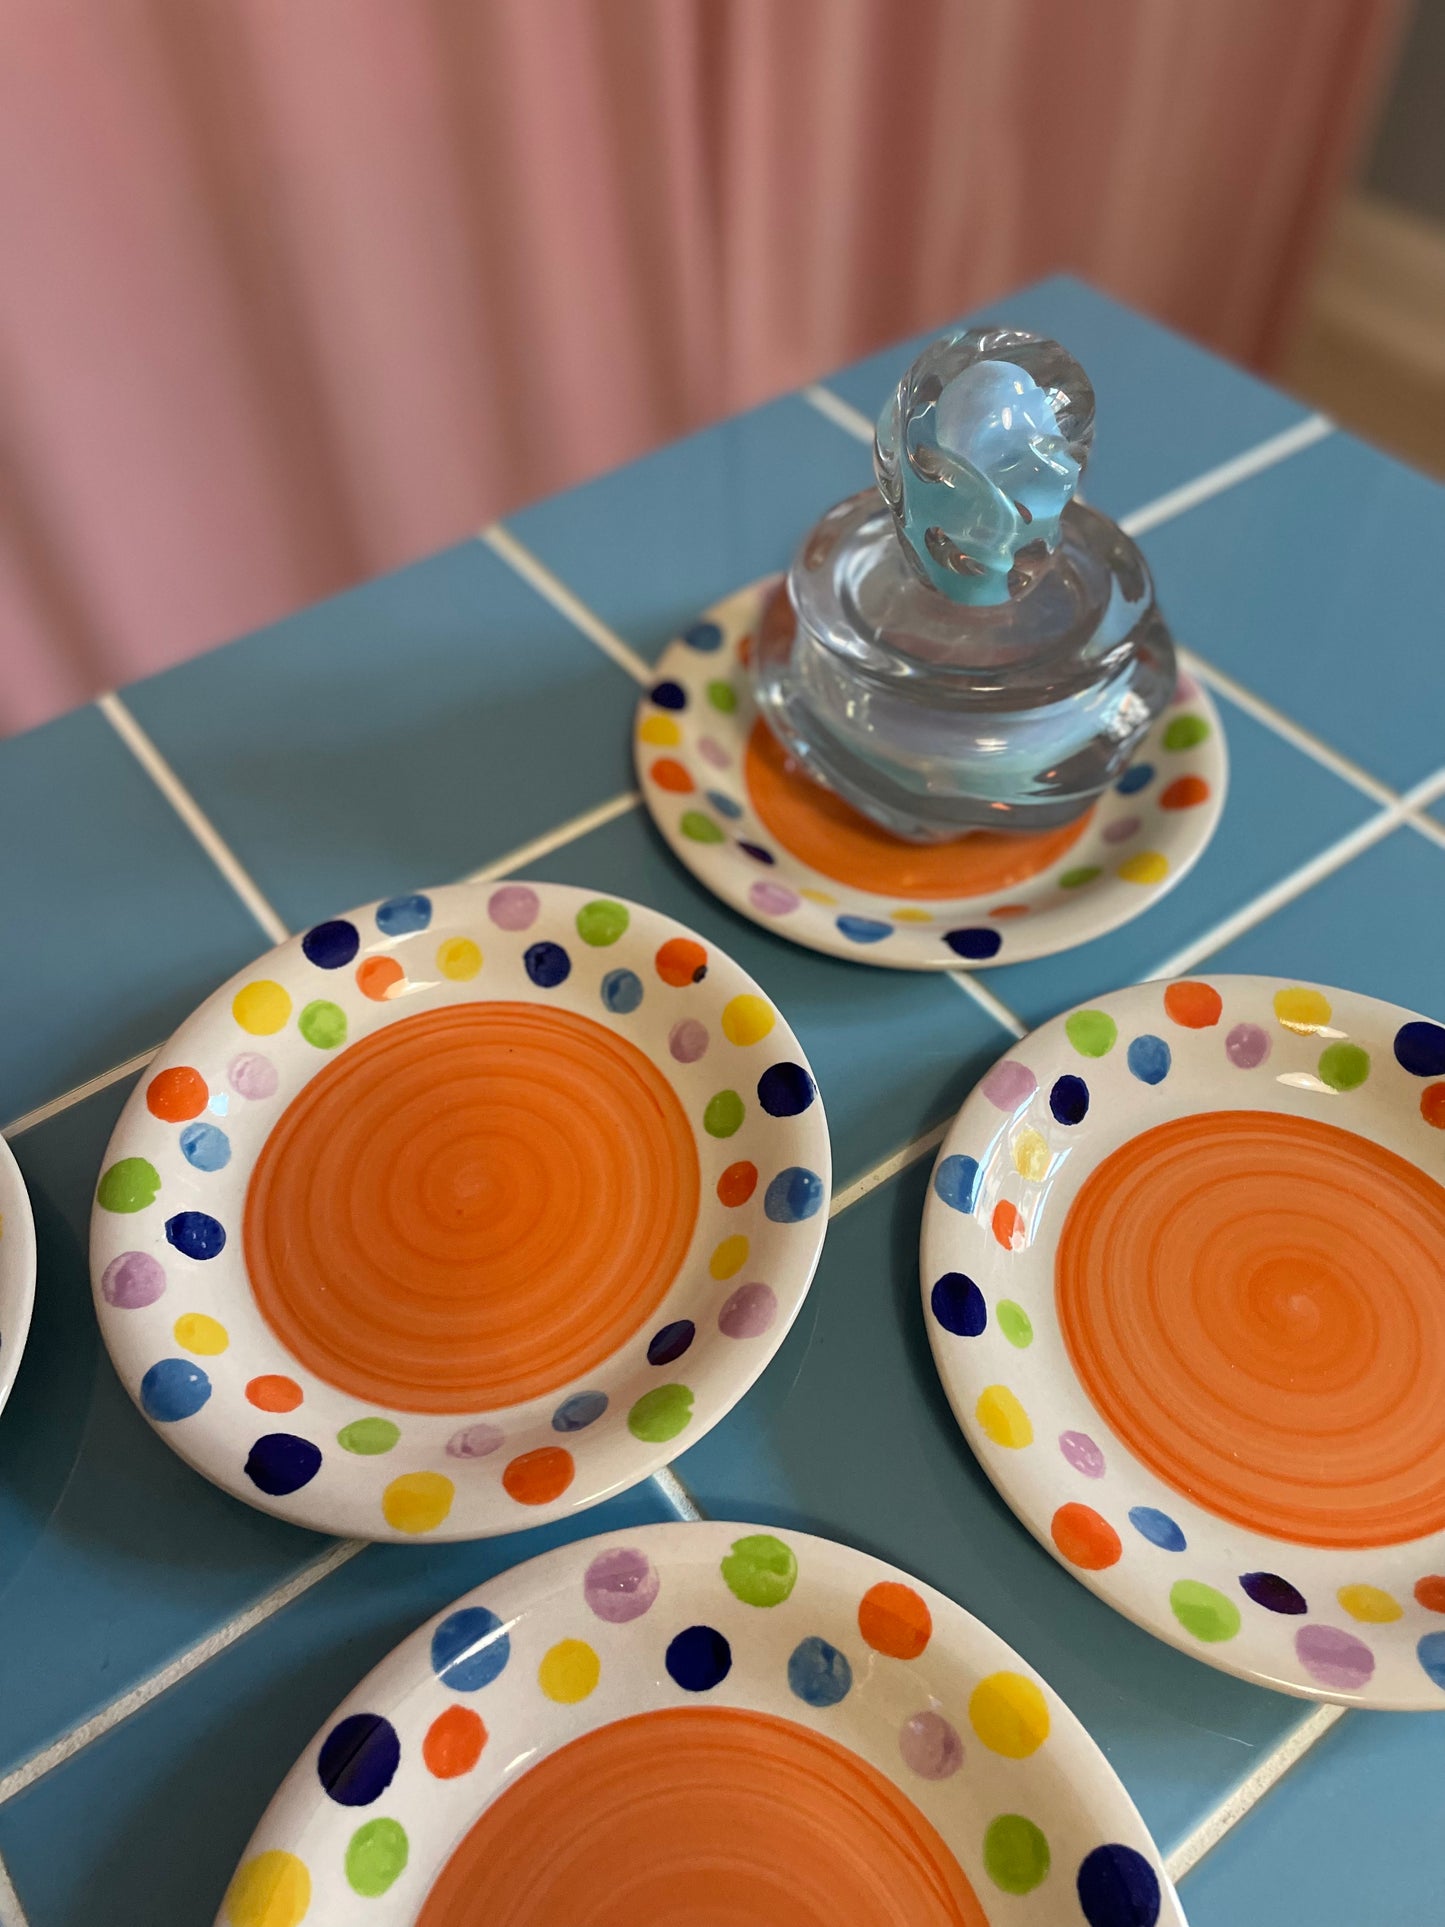 Tivoli style lunch plates with orange centre